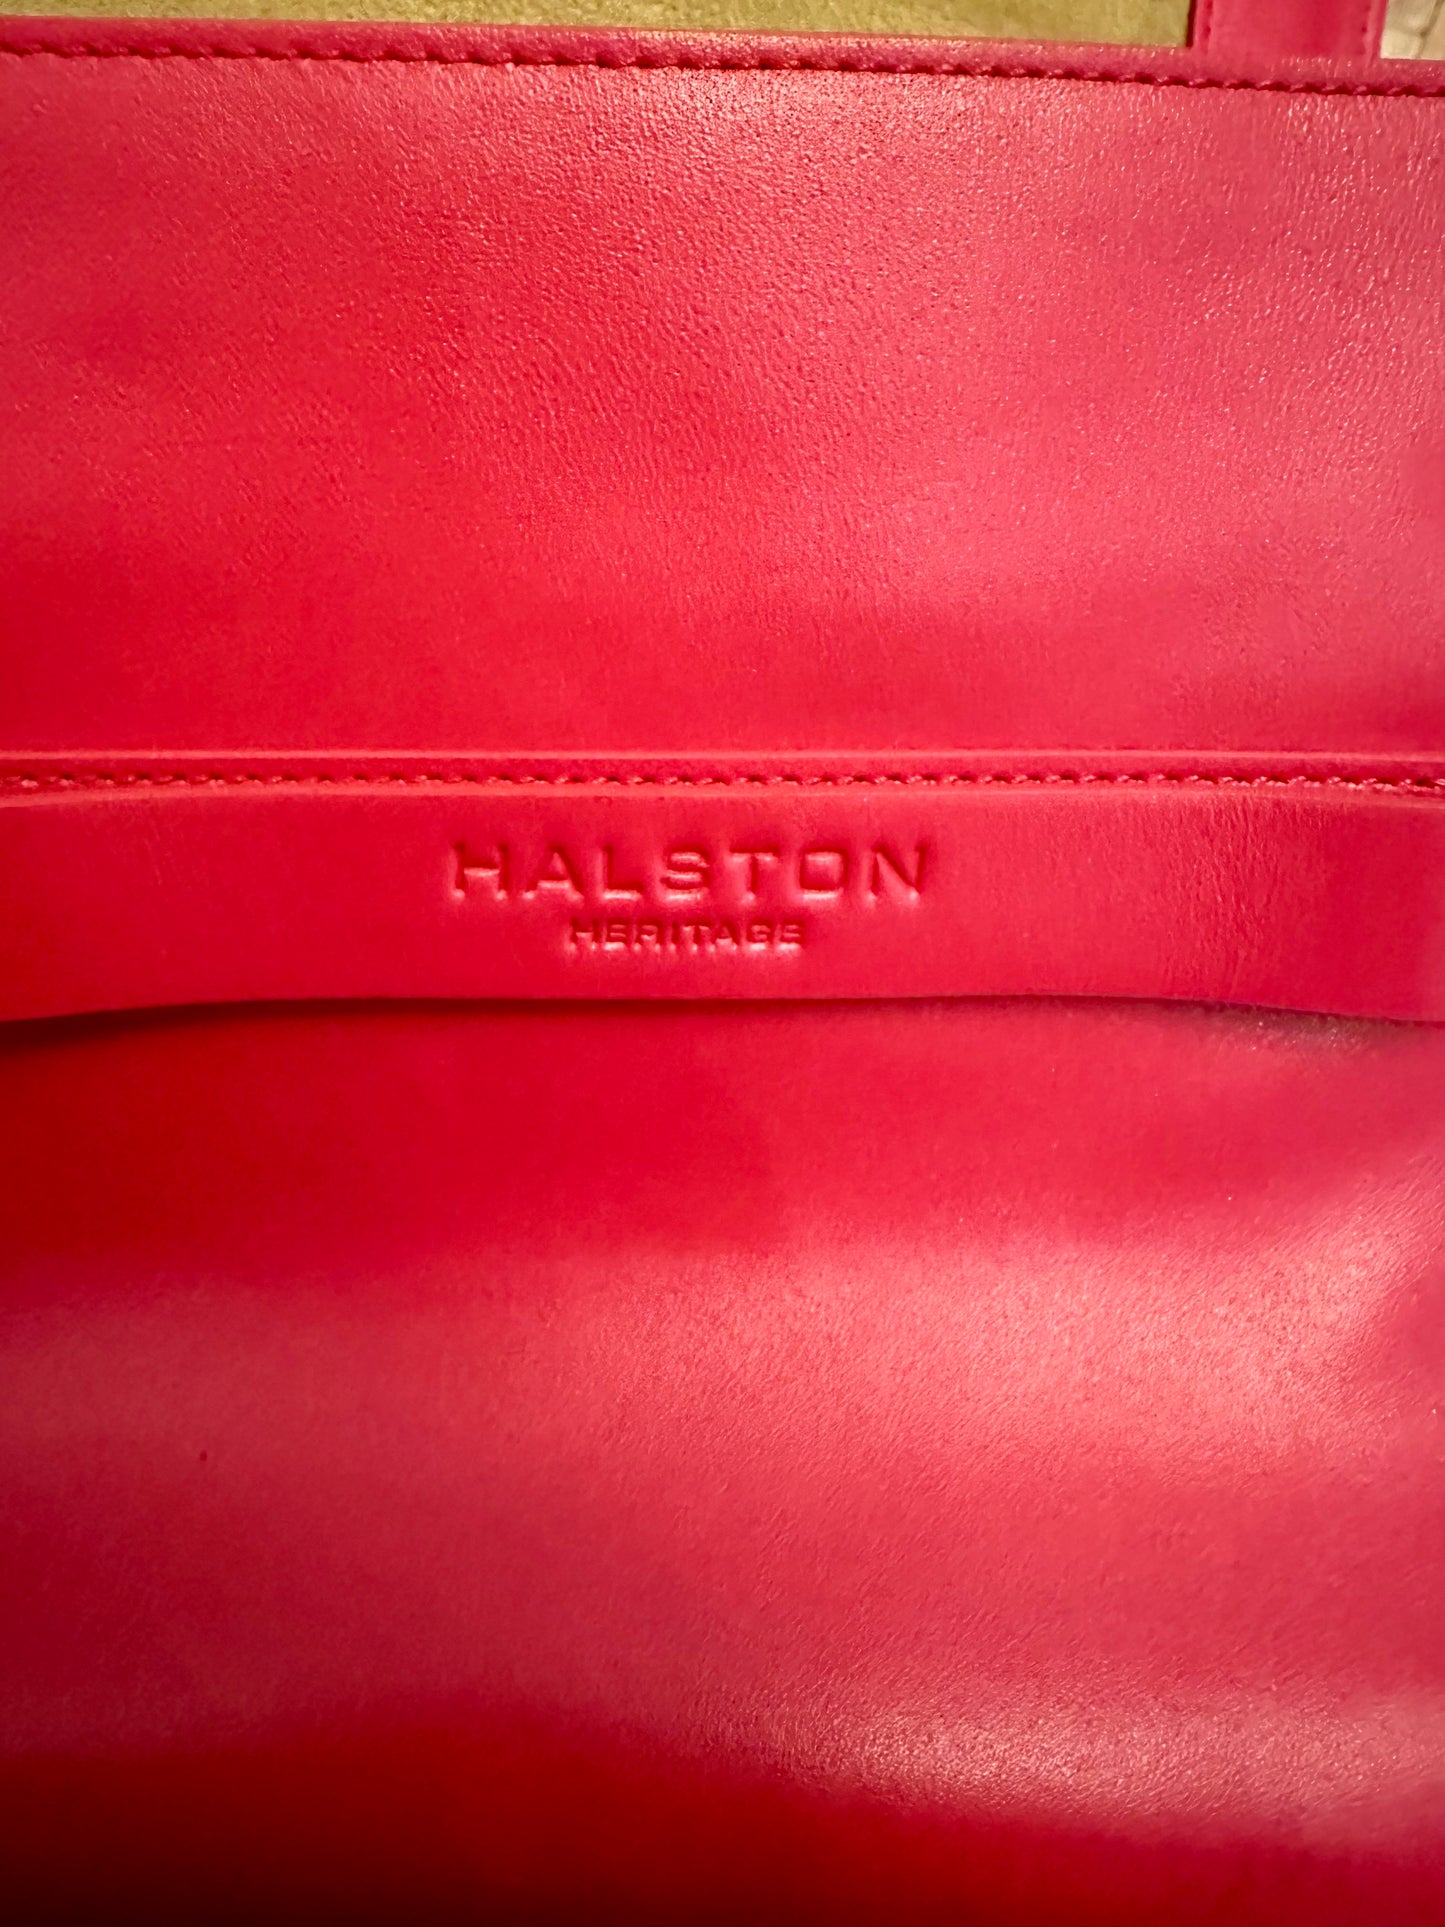 Halston Heritage Red Bag